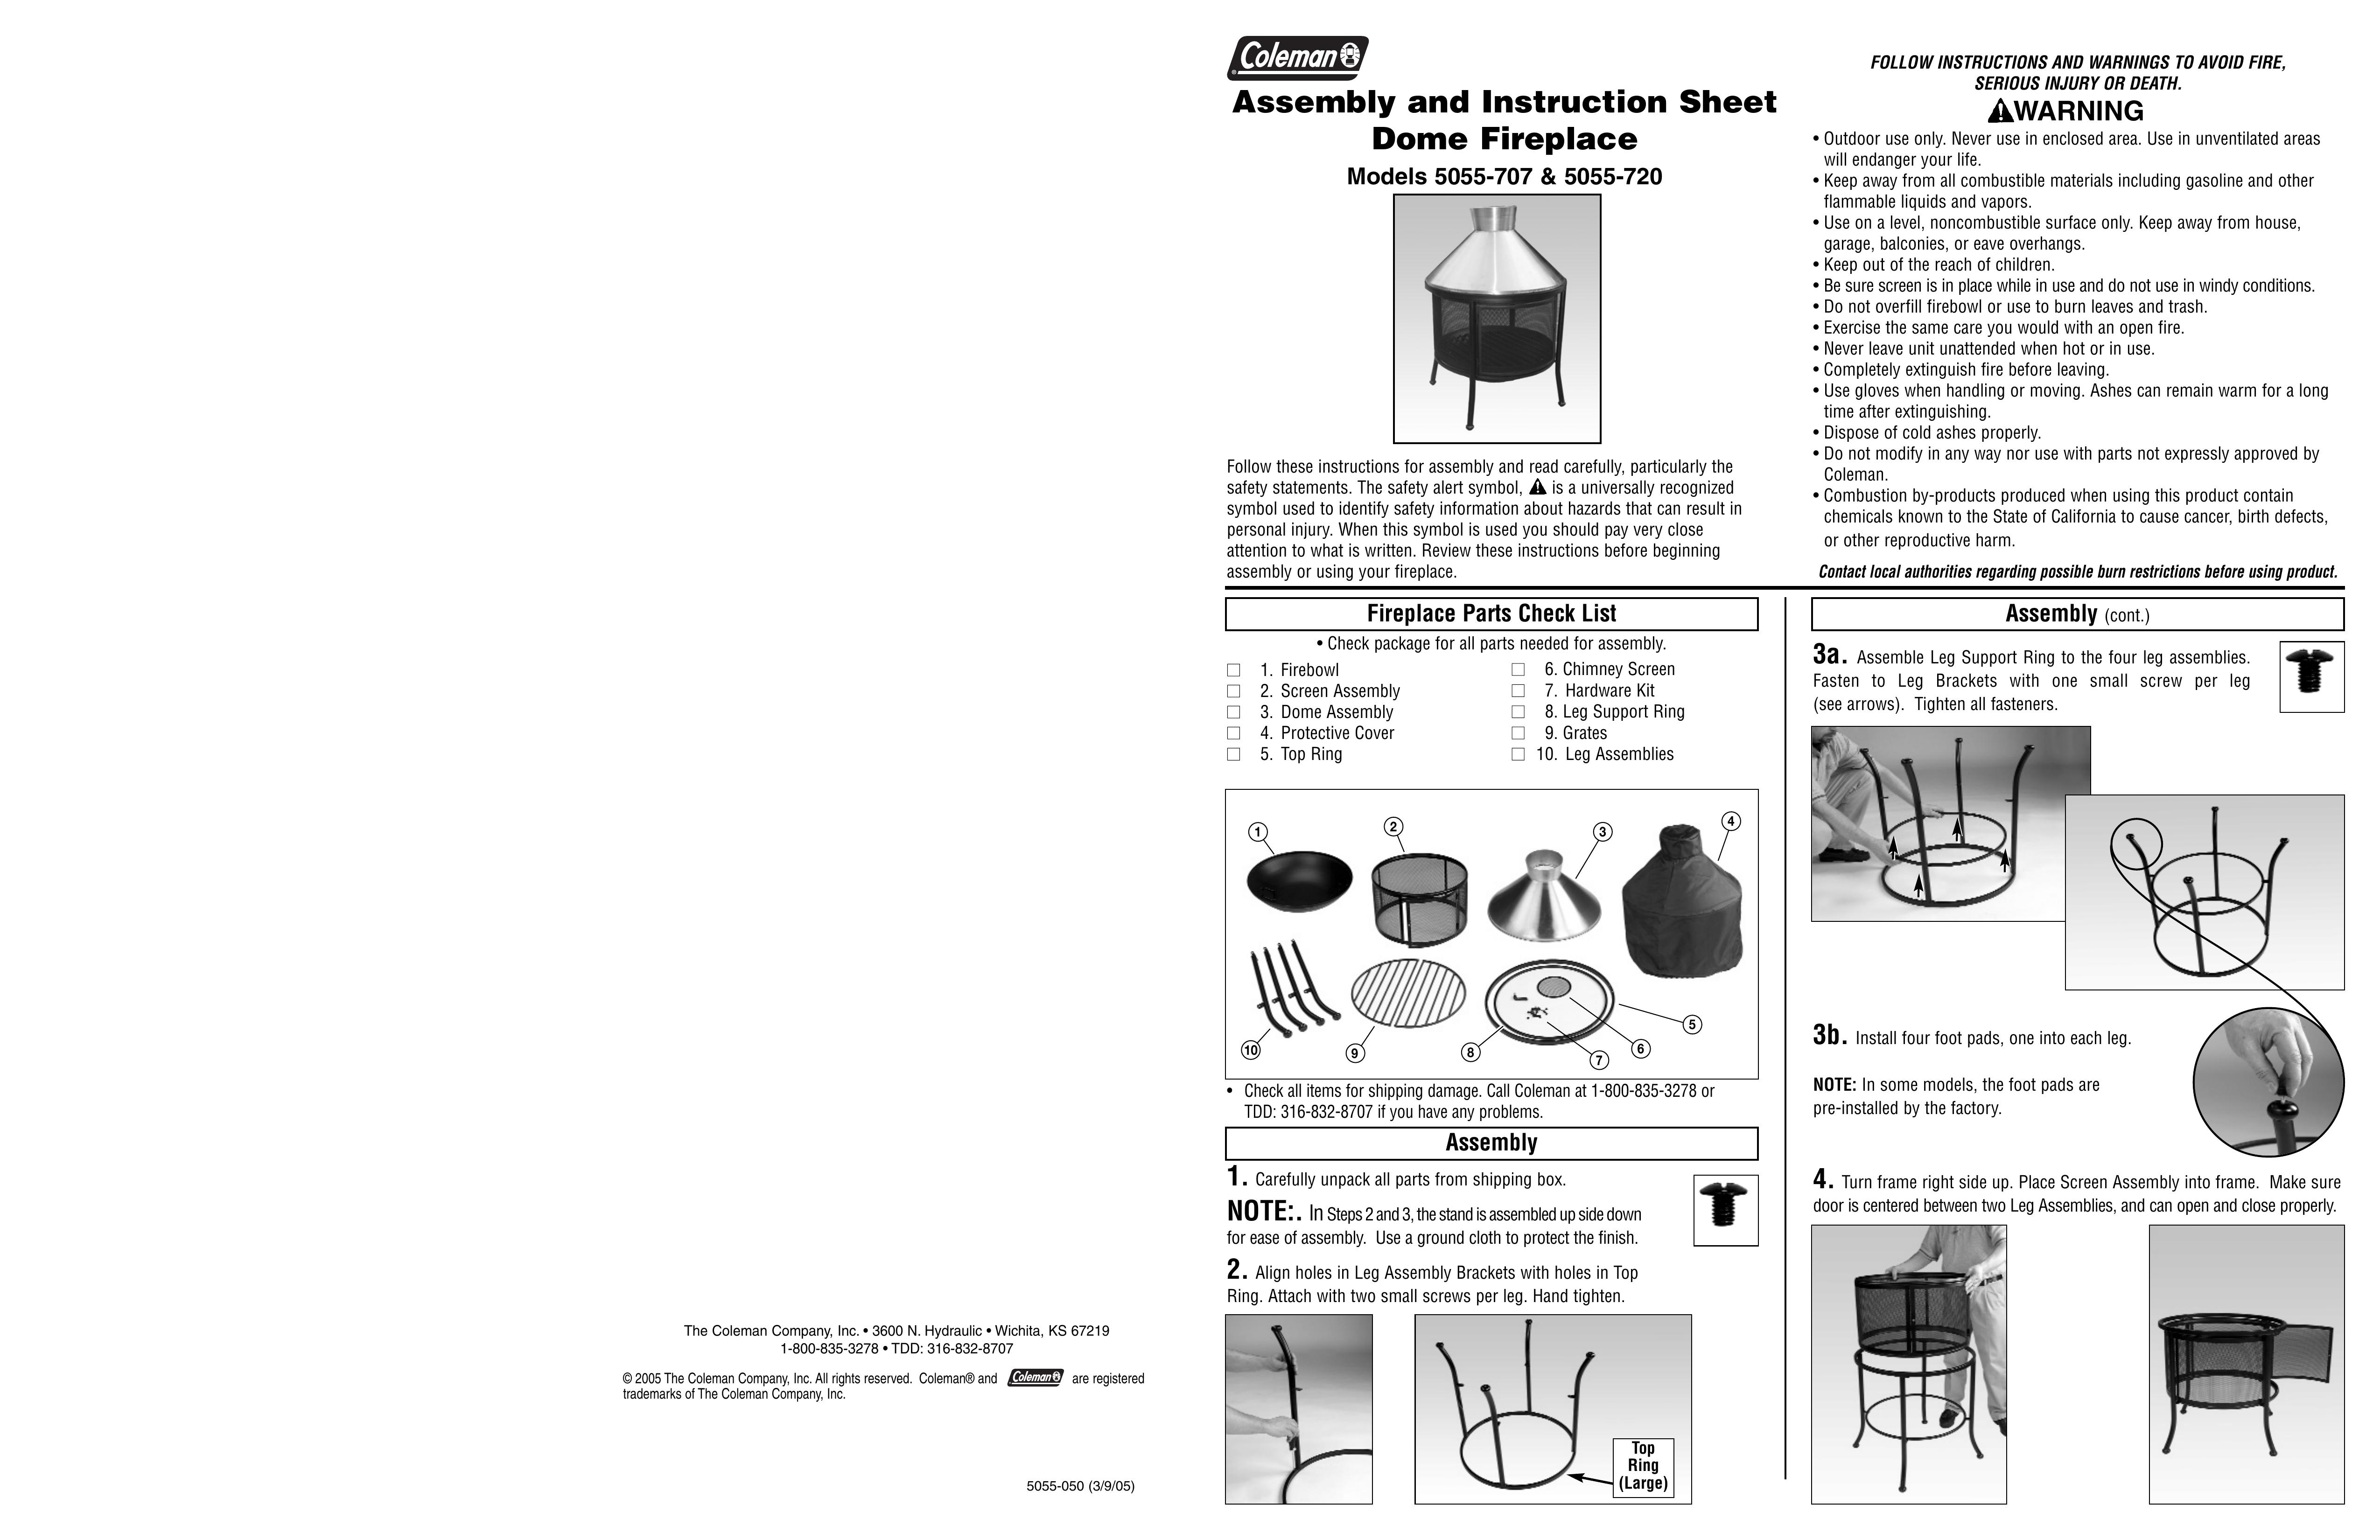 Coleman 5055-707 Outdoor Fireplace User Manual